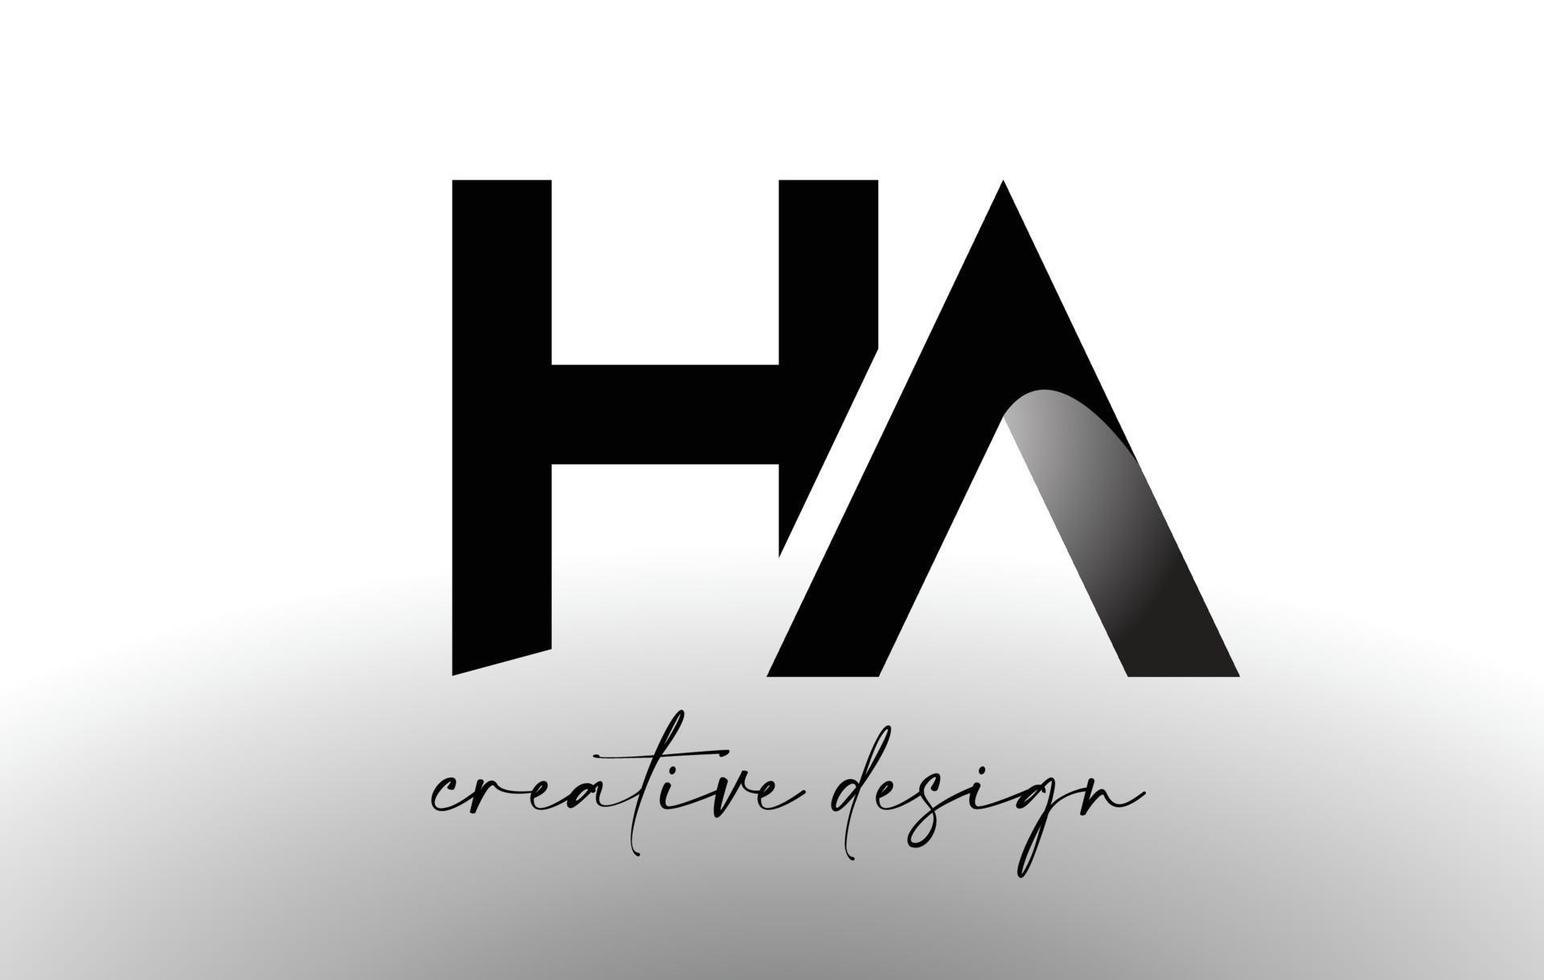 ha design de logotipo de letra com vetor de ícone elegante minimalista look.ha com design moderno design criativo.